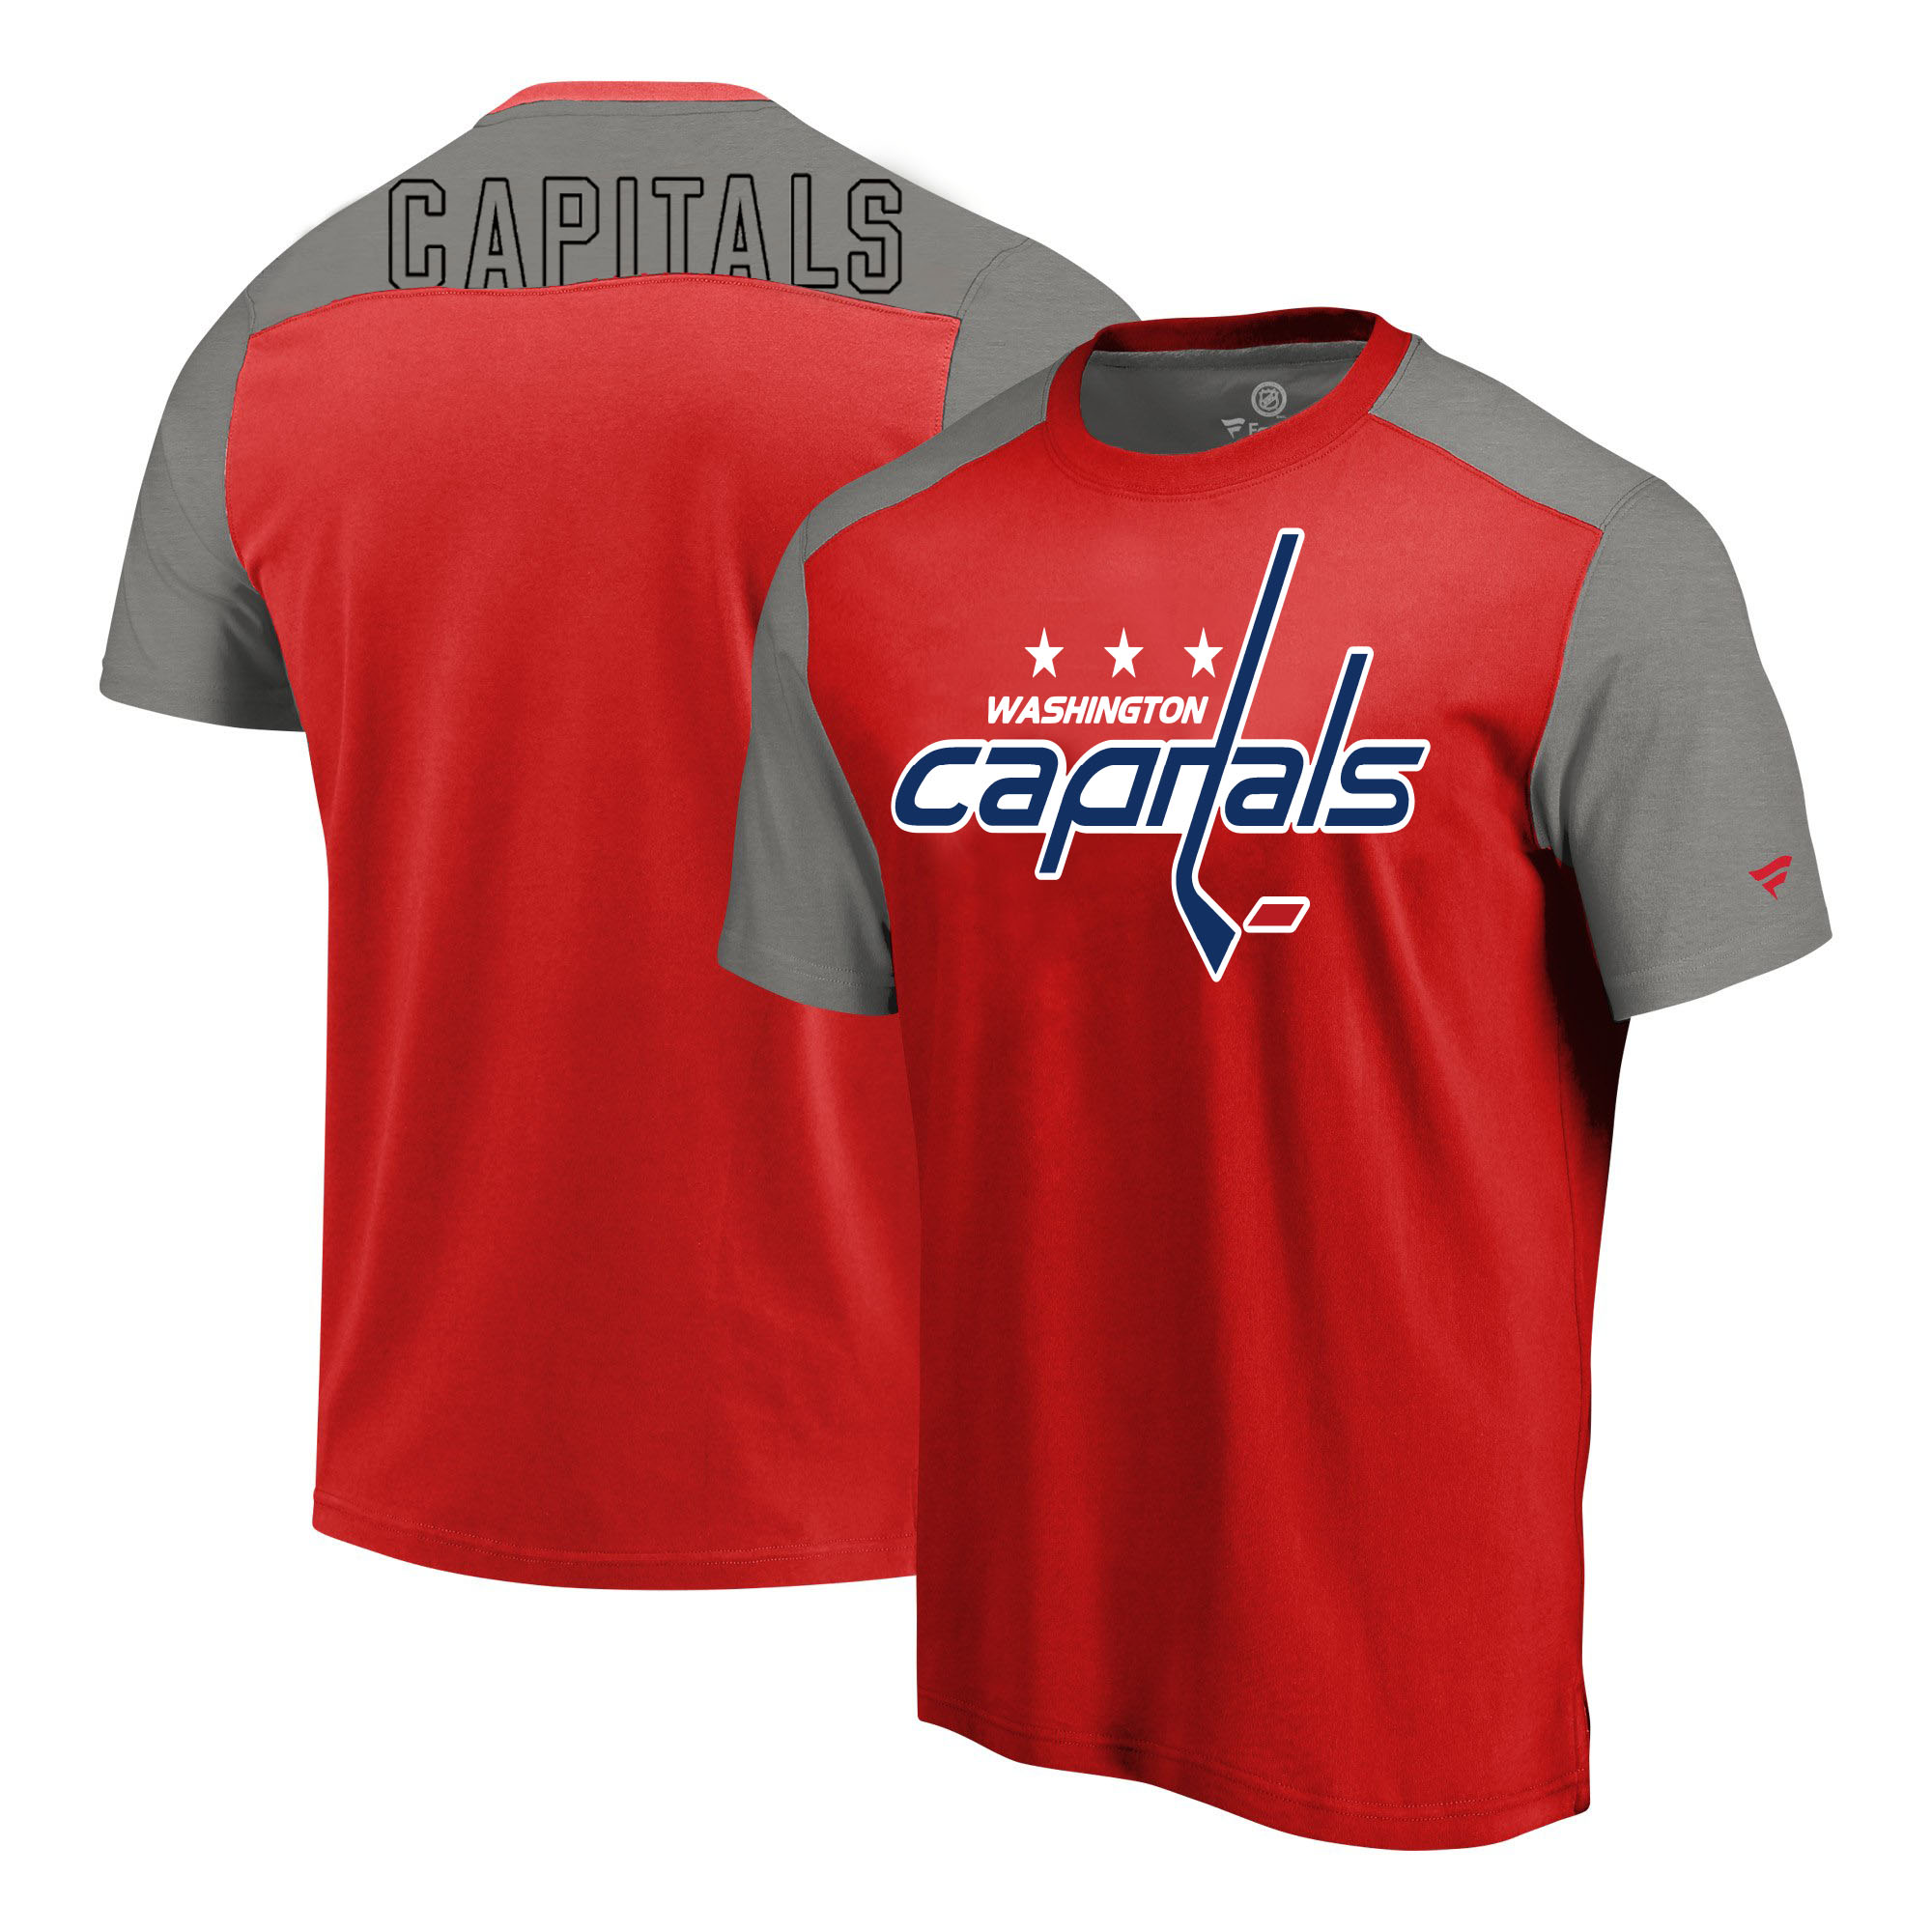 Washington Capitals Fanatics Branded Iconic Blocked T-Shirt Red Heathered Gray - Click Image to Close